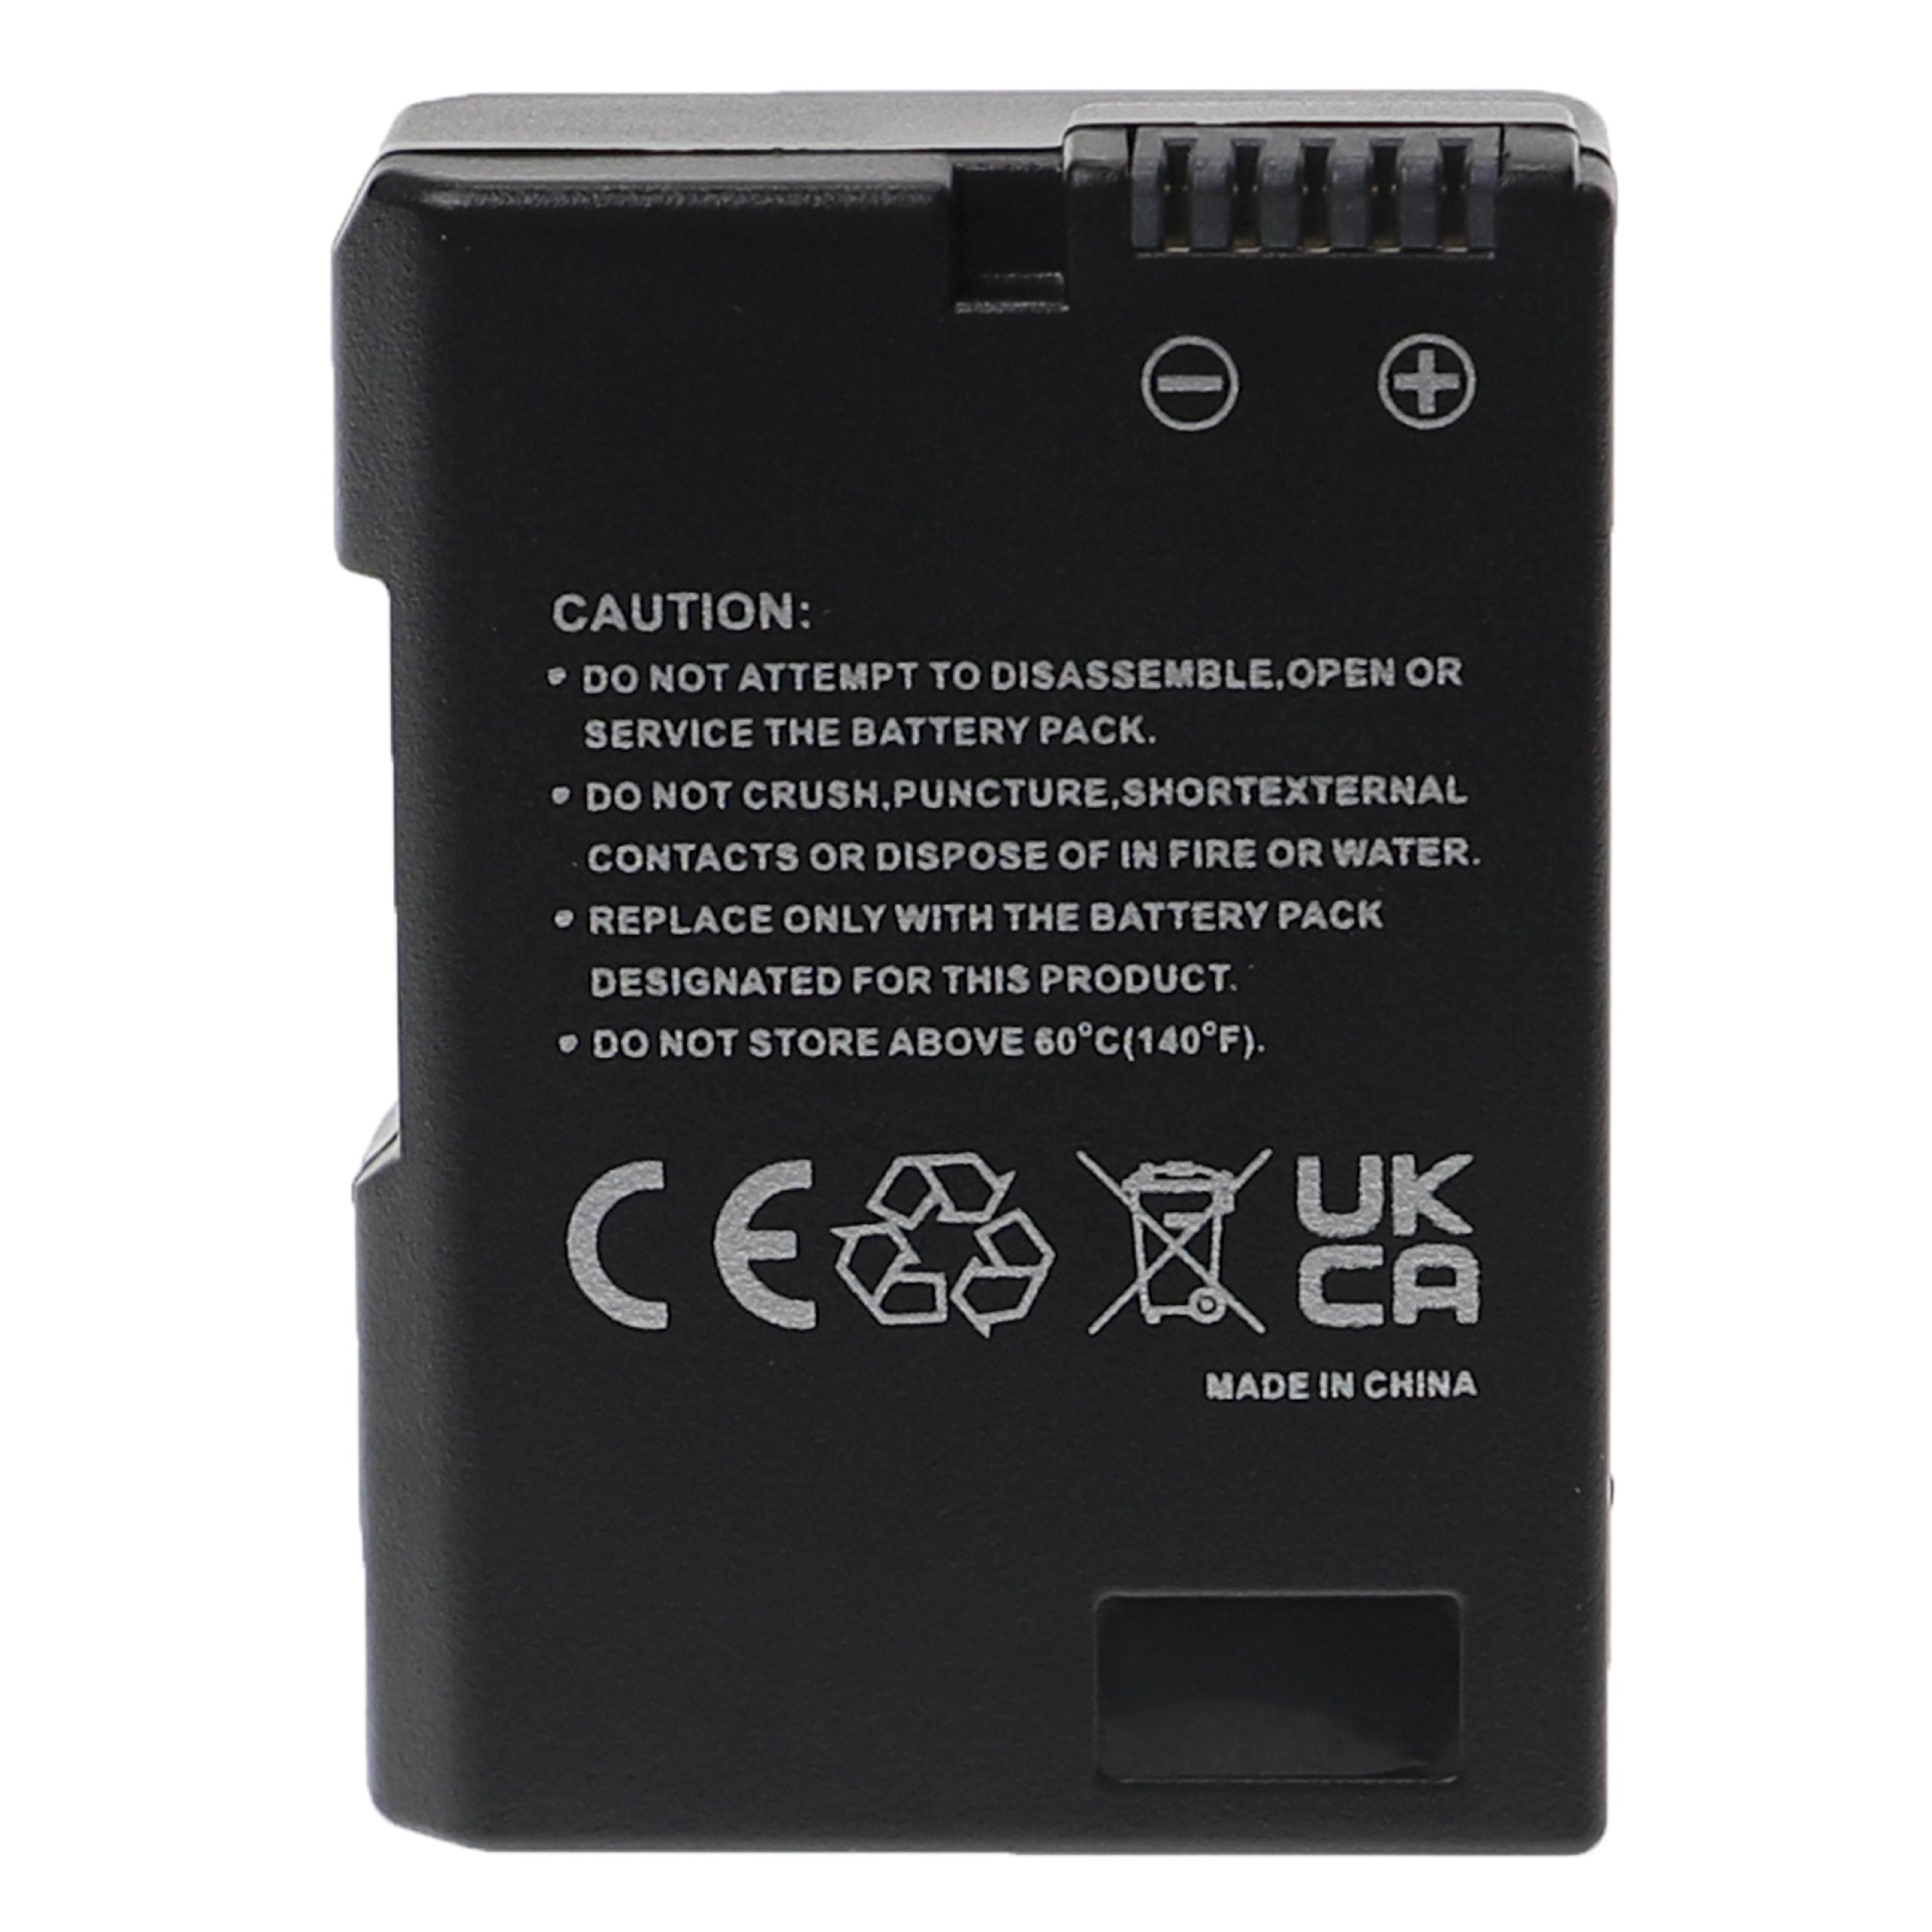 3x Akumulator do aparatu cyfrowego zamiennik Nikon EN-EL14 - 1100 mAh 7,4 V Li-Ion z chipem